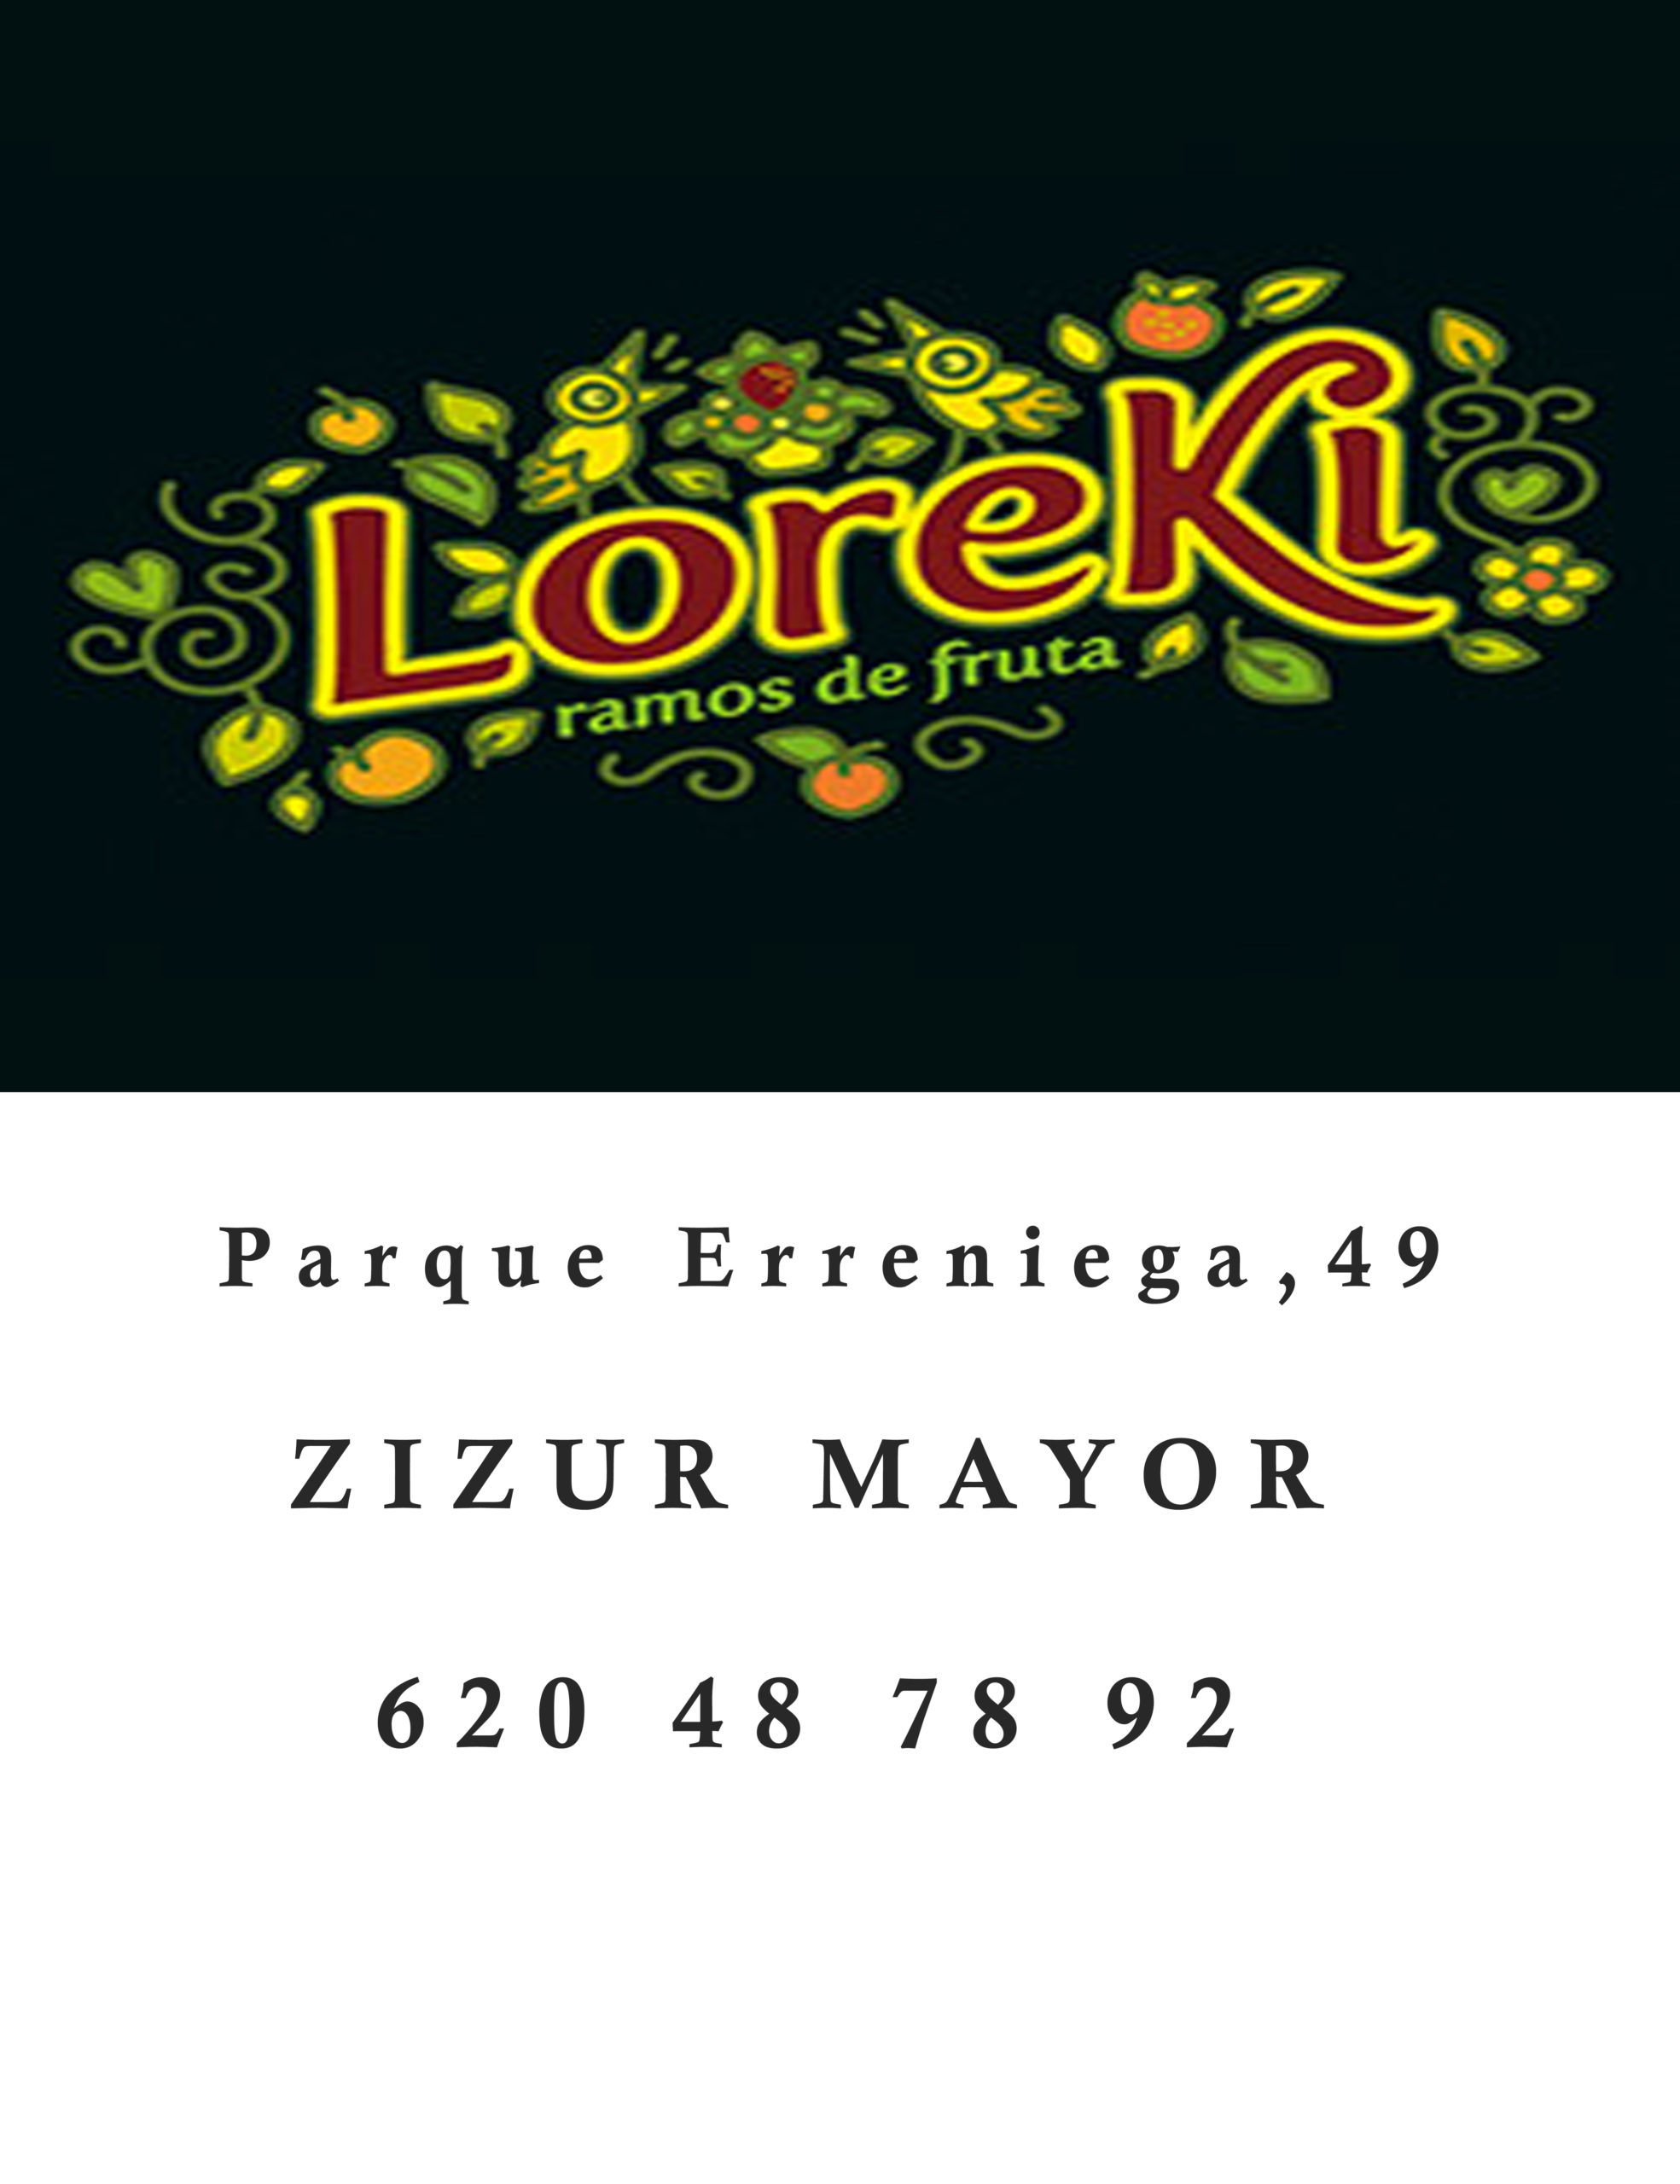 Loreki